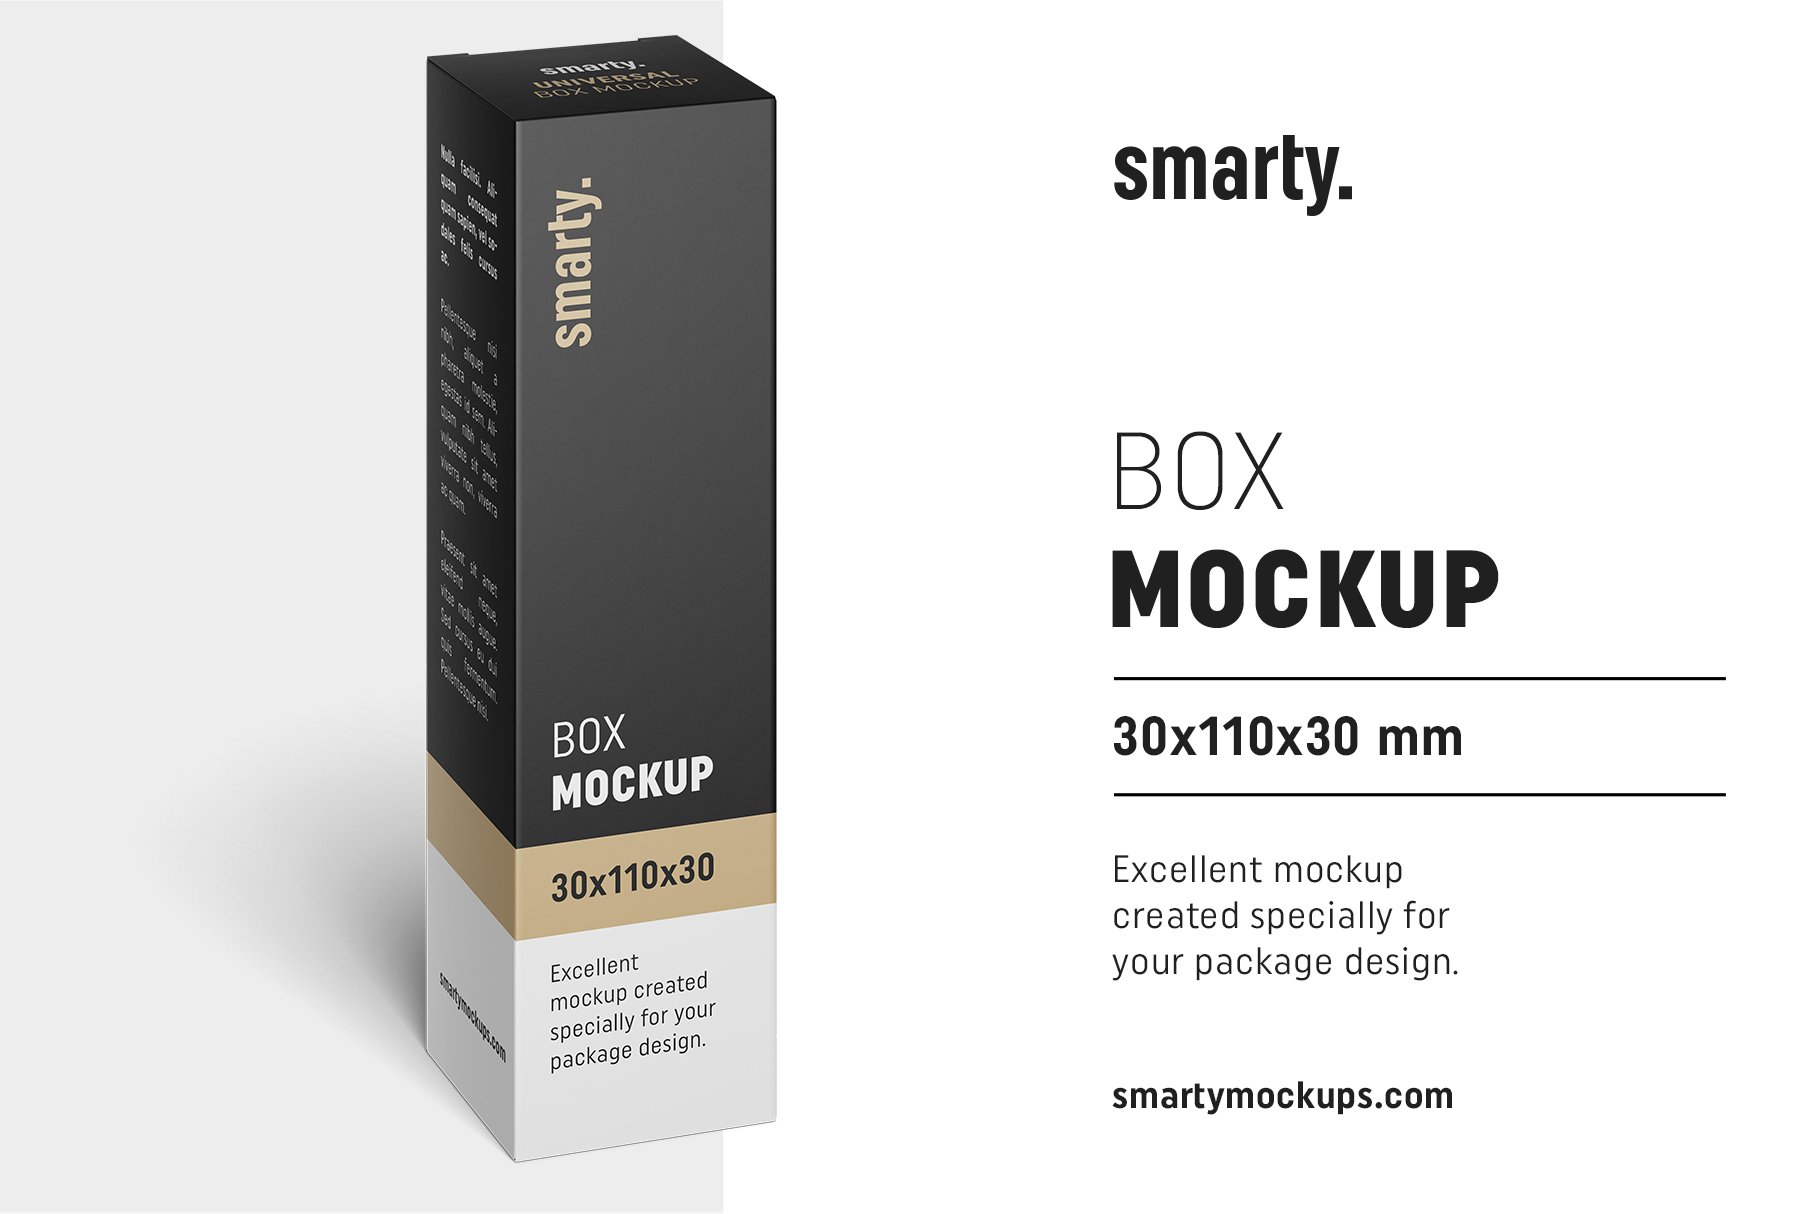 Box mockup / 30x110x30 mm cover image.